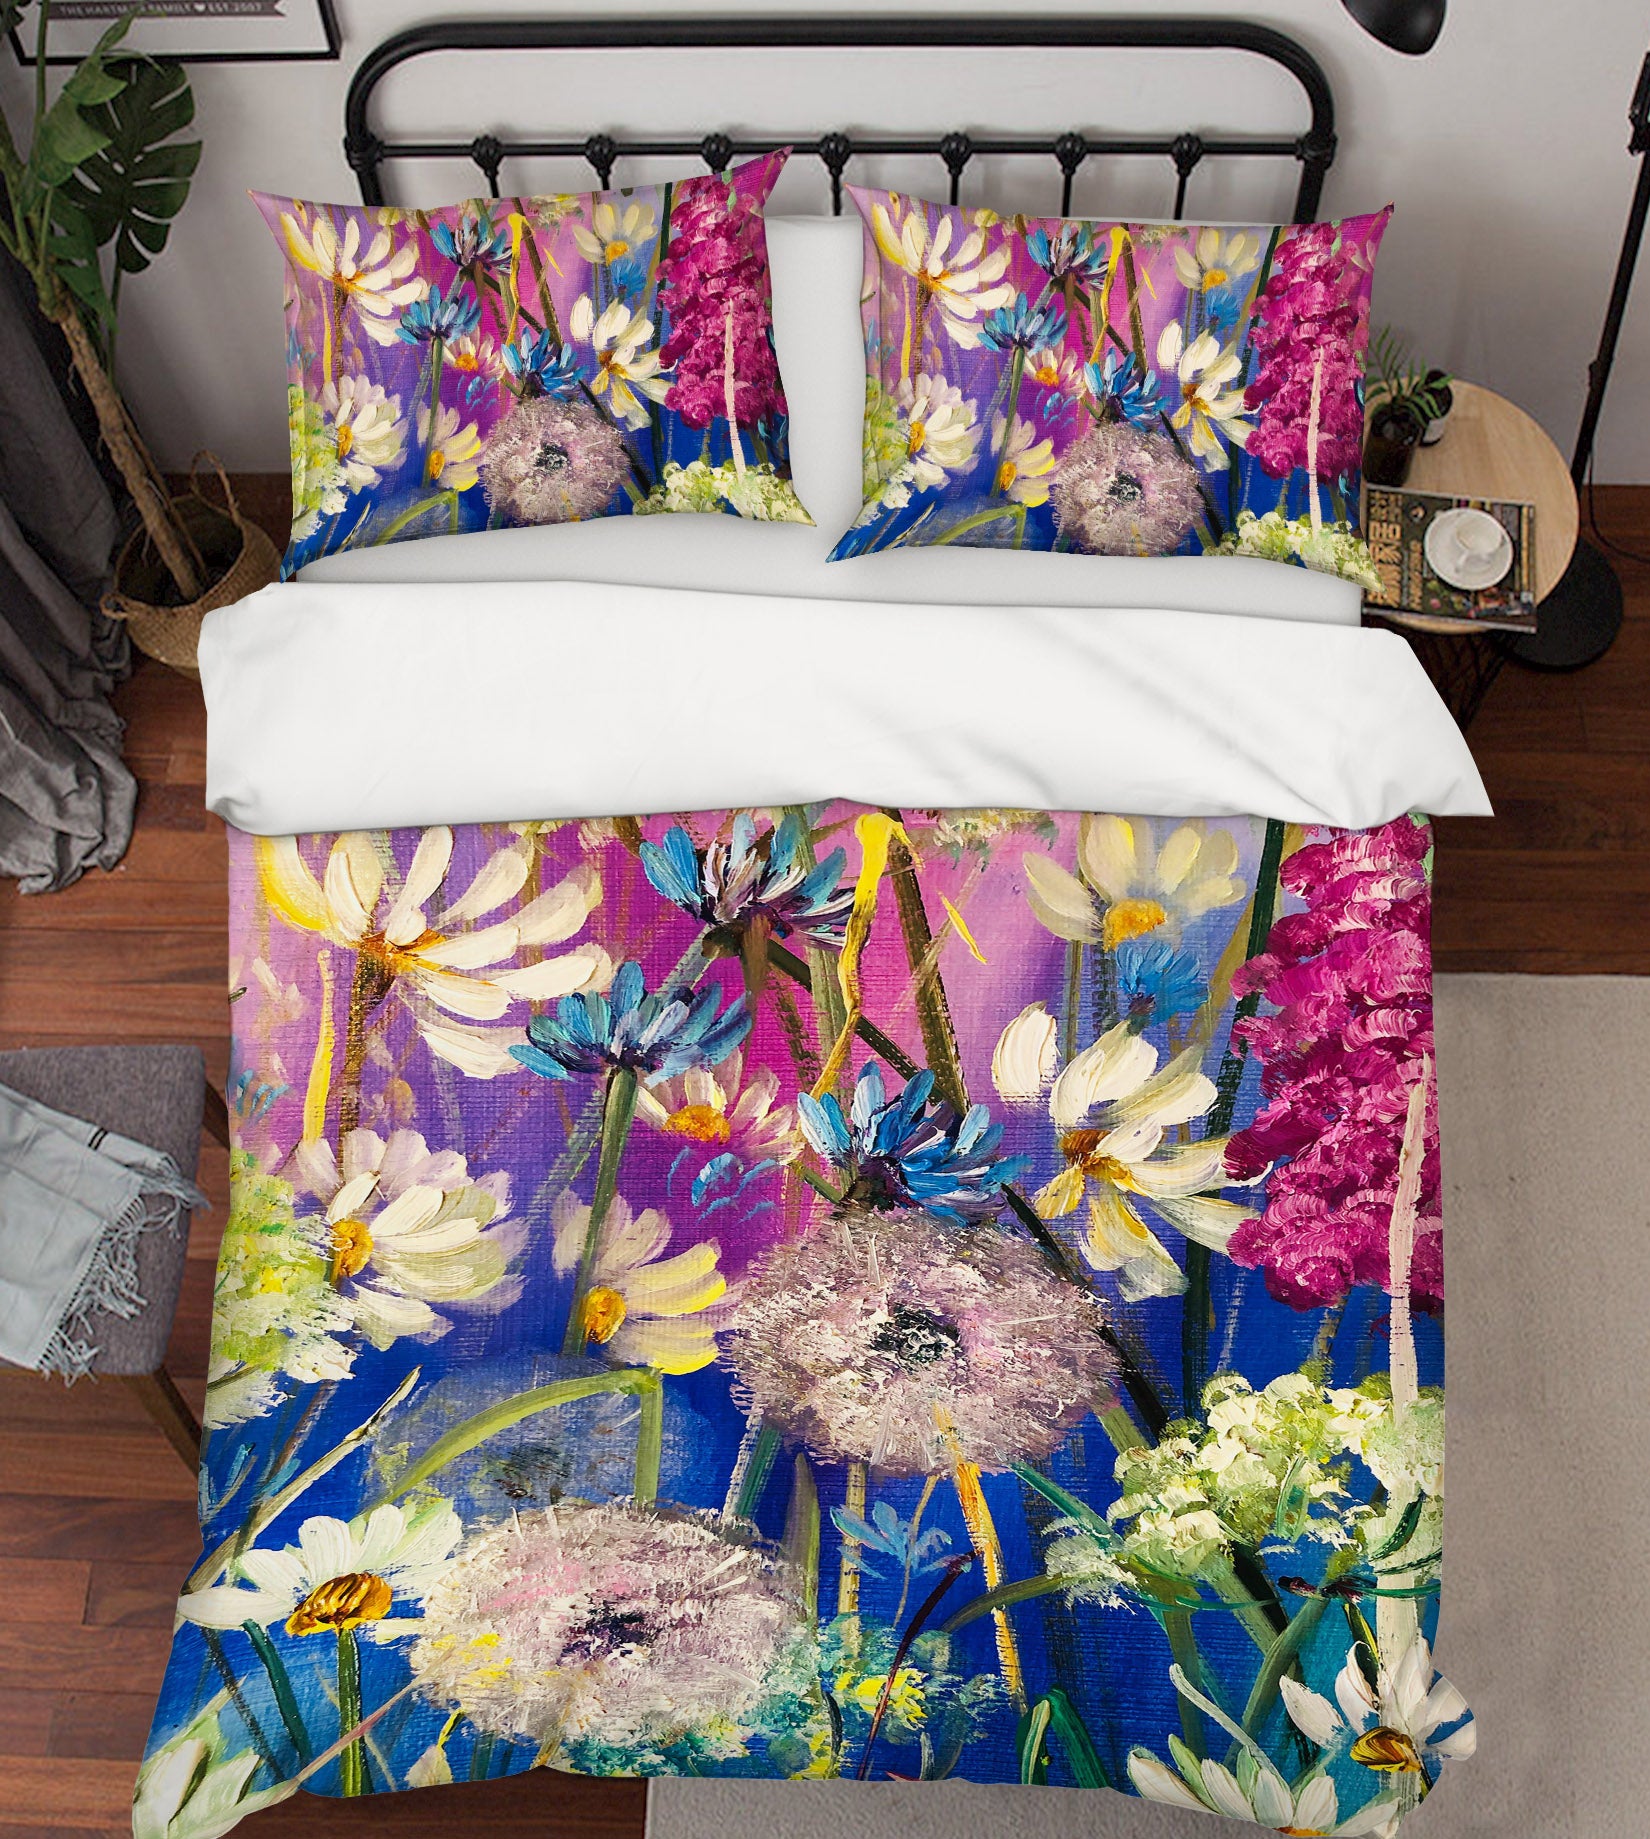 3D Bright Flowers 559 Skromova Marina Bedding Bed Pillowcases Quilt